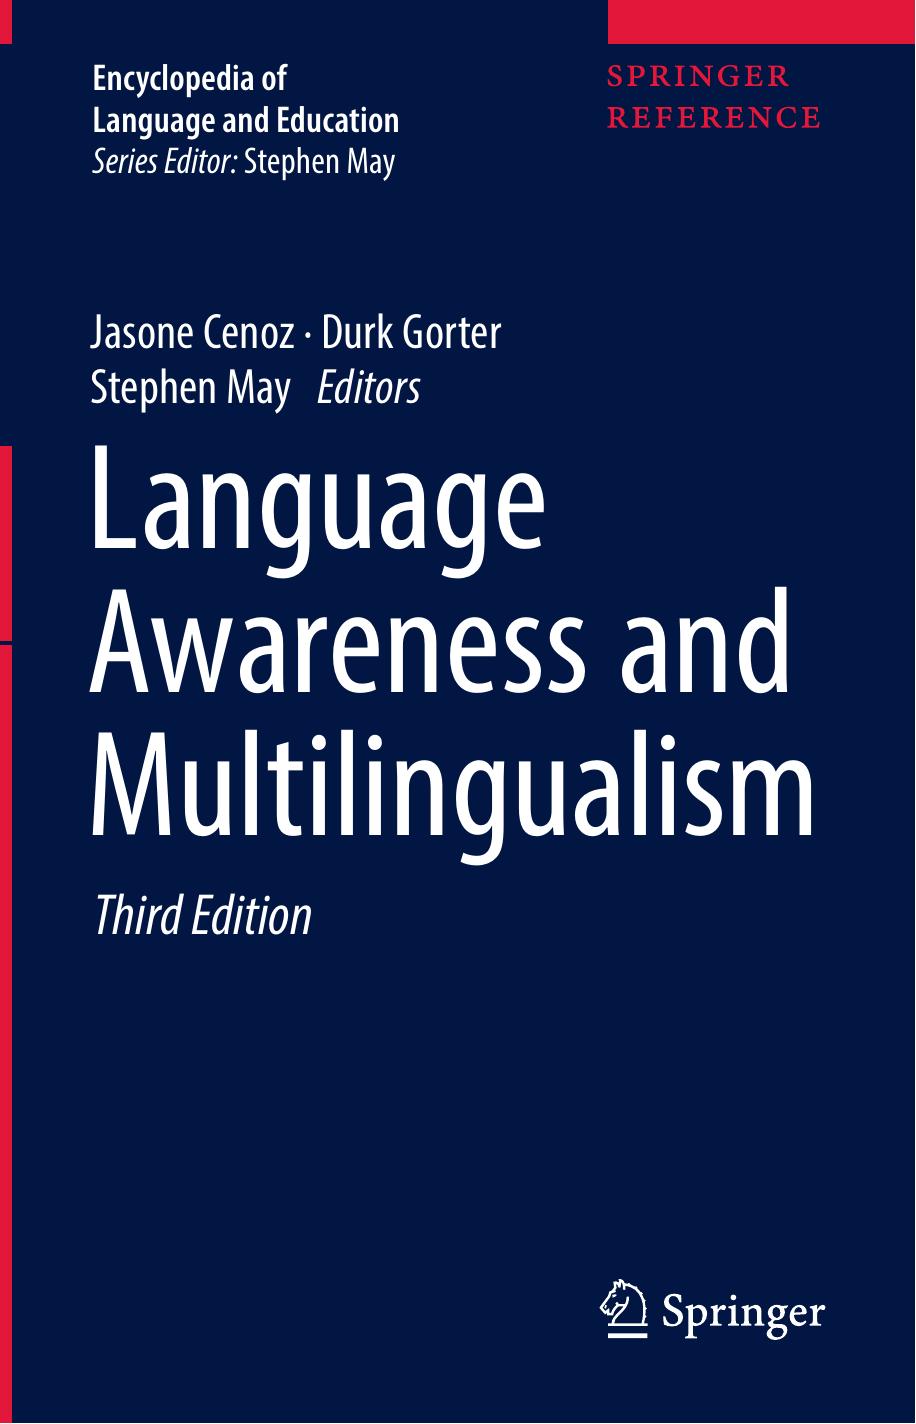 Encyclopedia of Language and Education: Language Awareness and Multilingualism